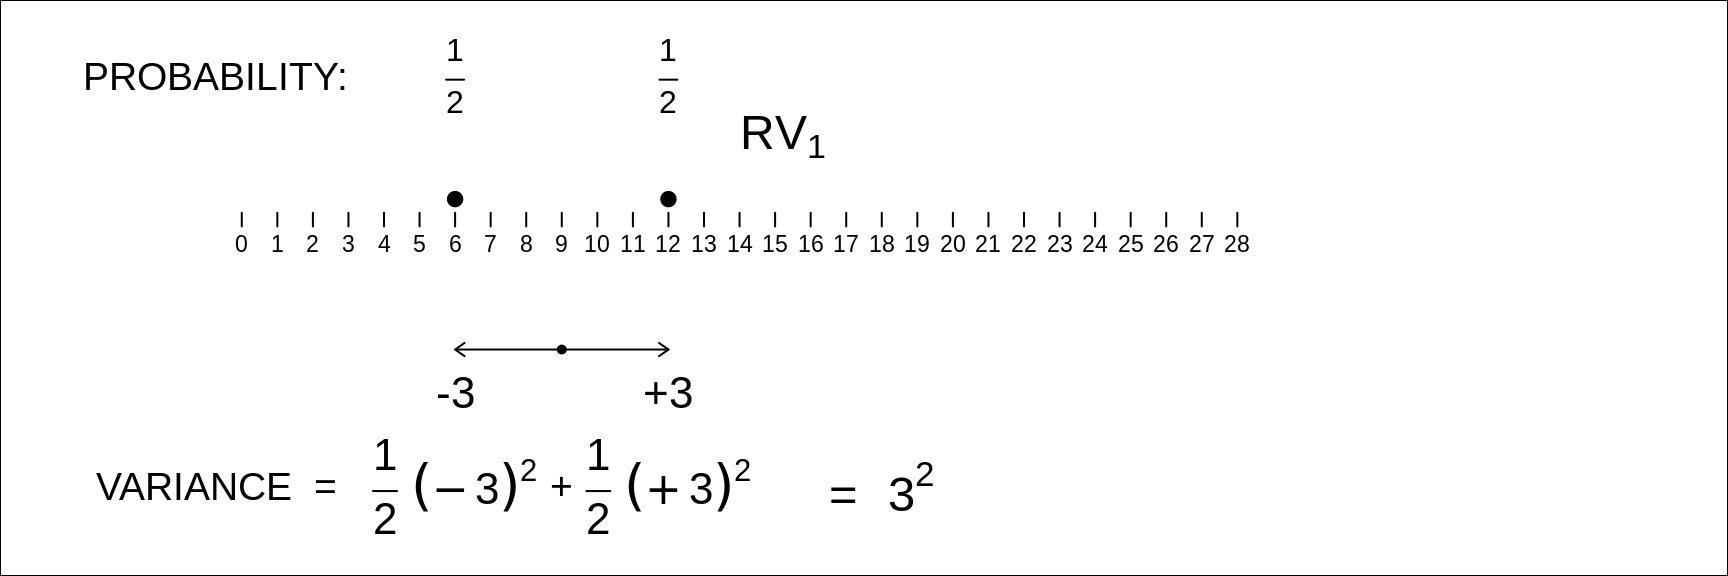 Variance of RV1